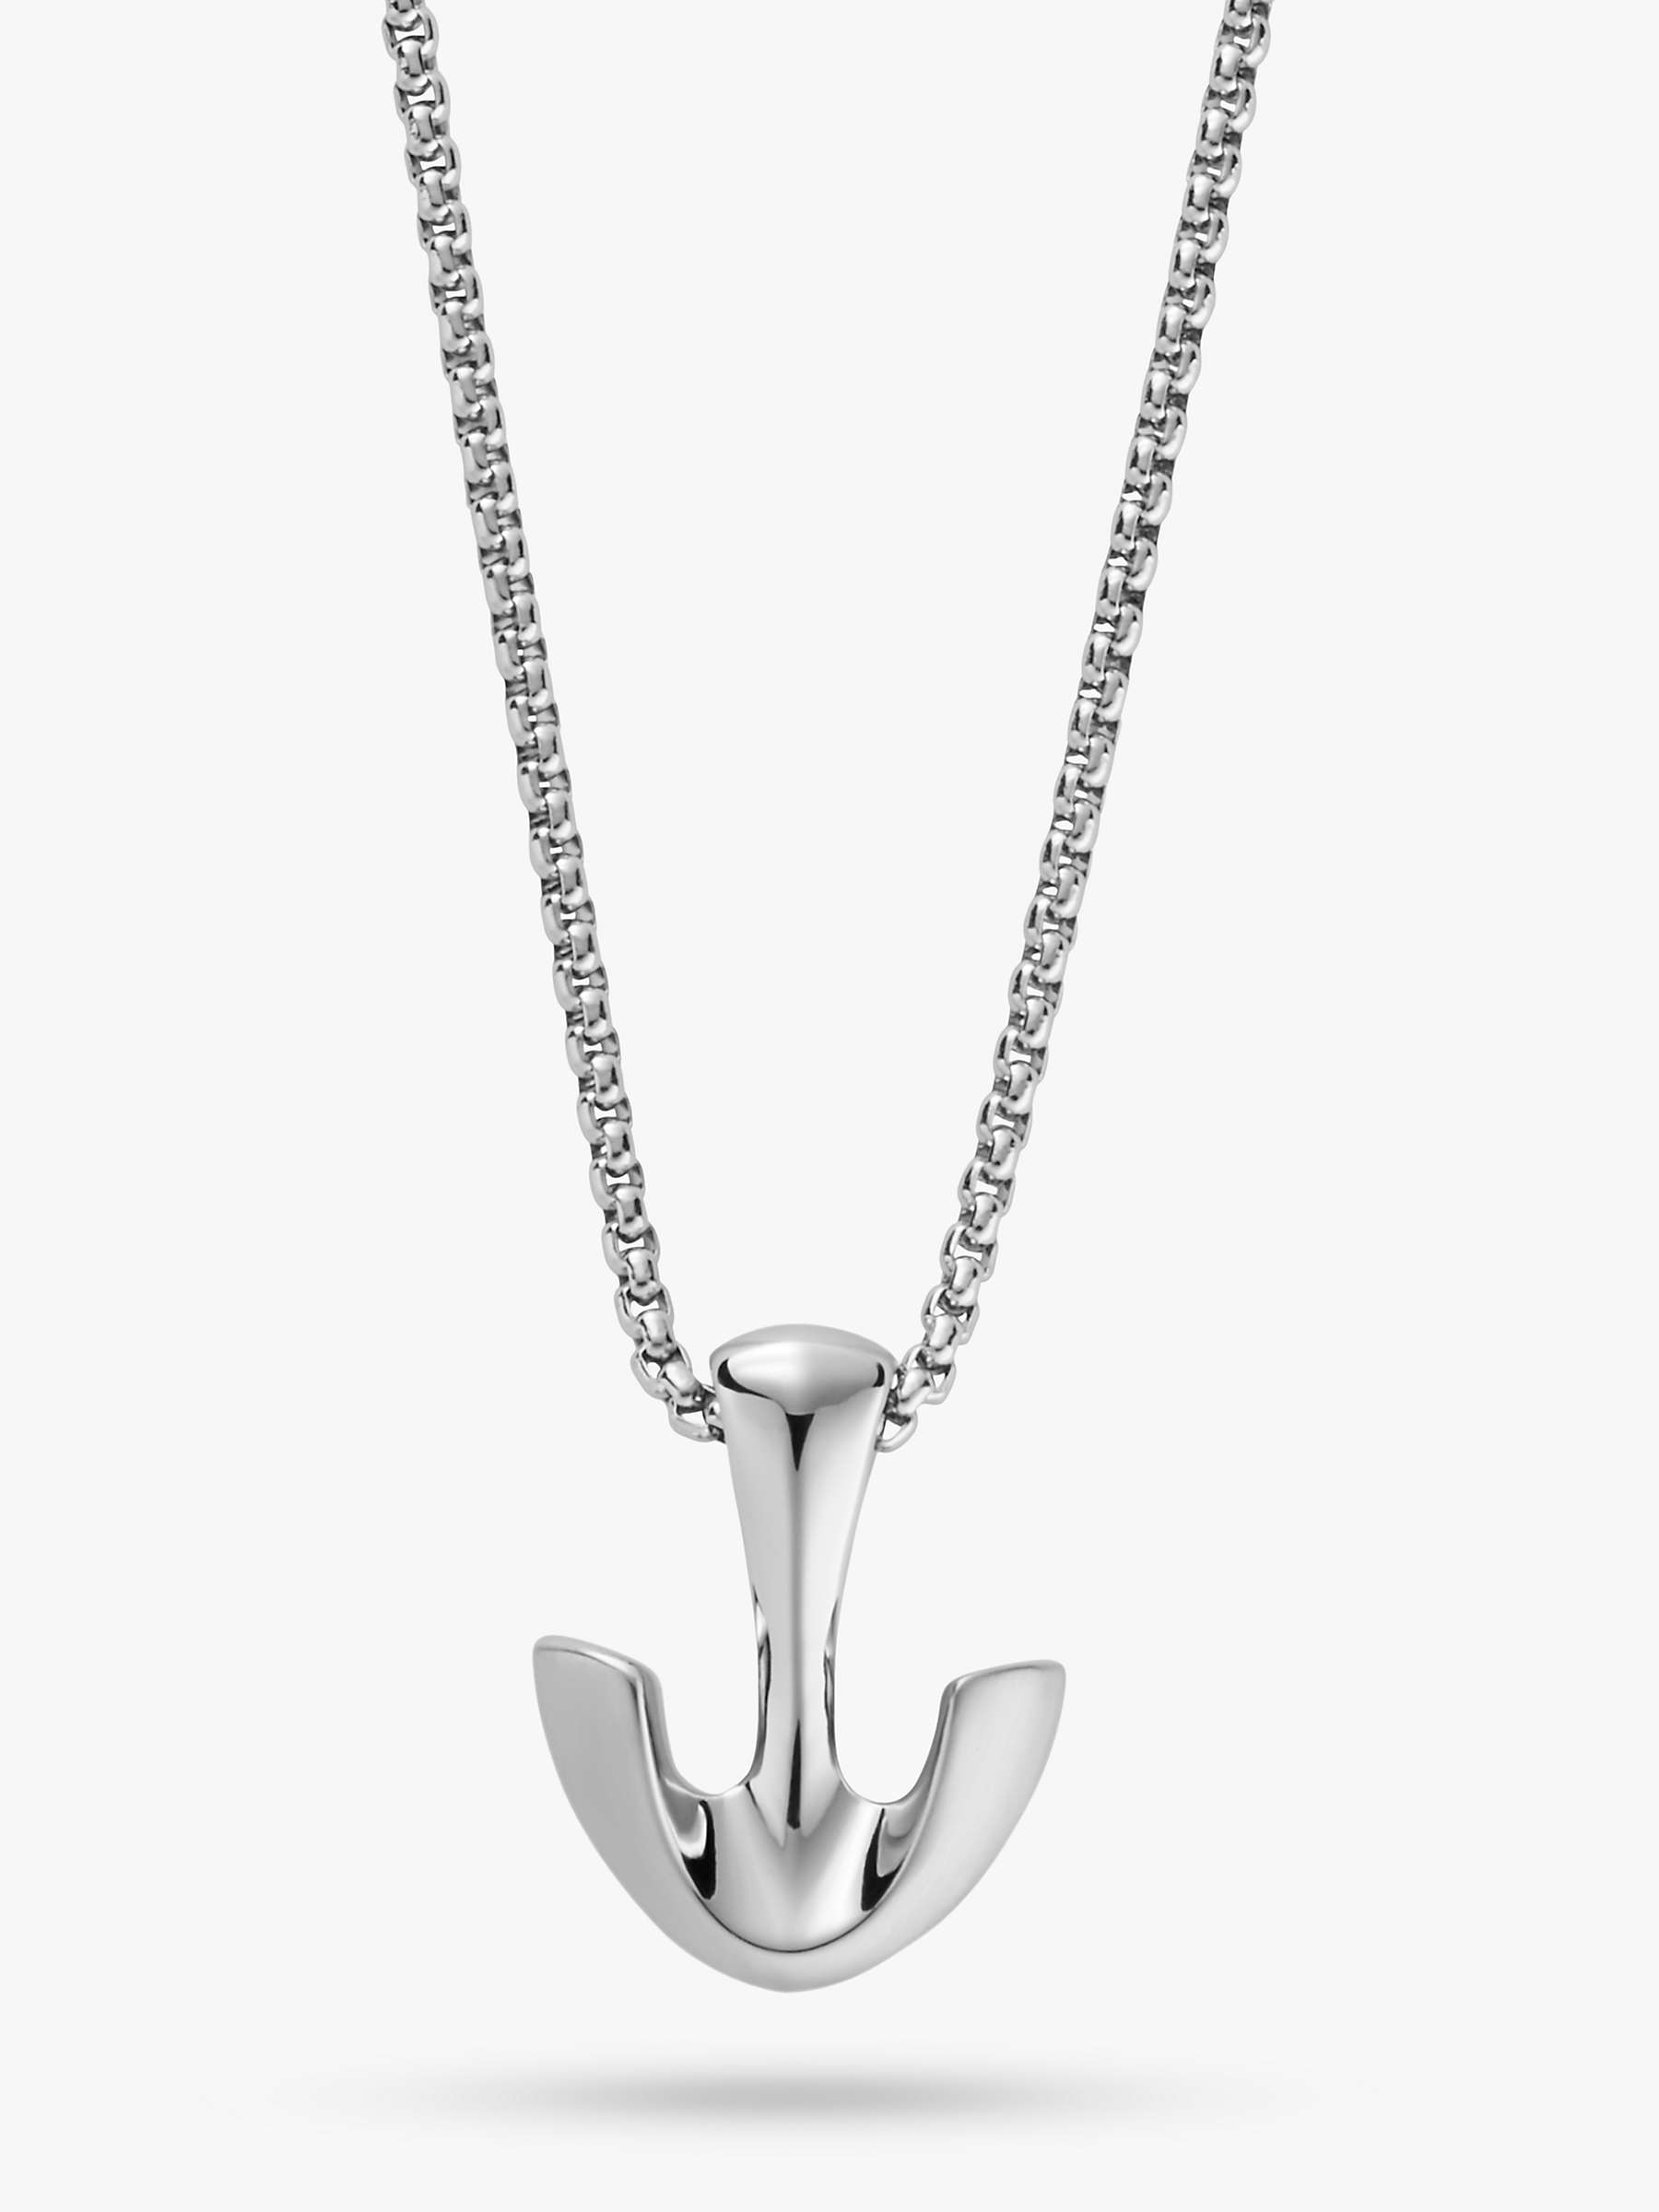 Buy Skagen Men's Anchor Pendant Necklace, Silver Online at johnlewis.com